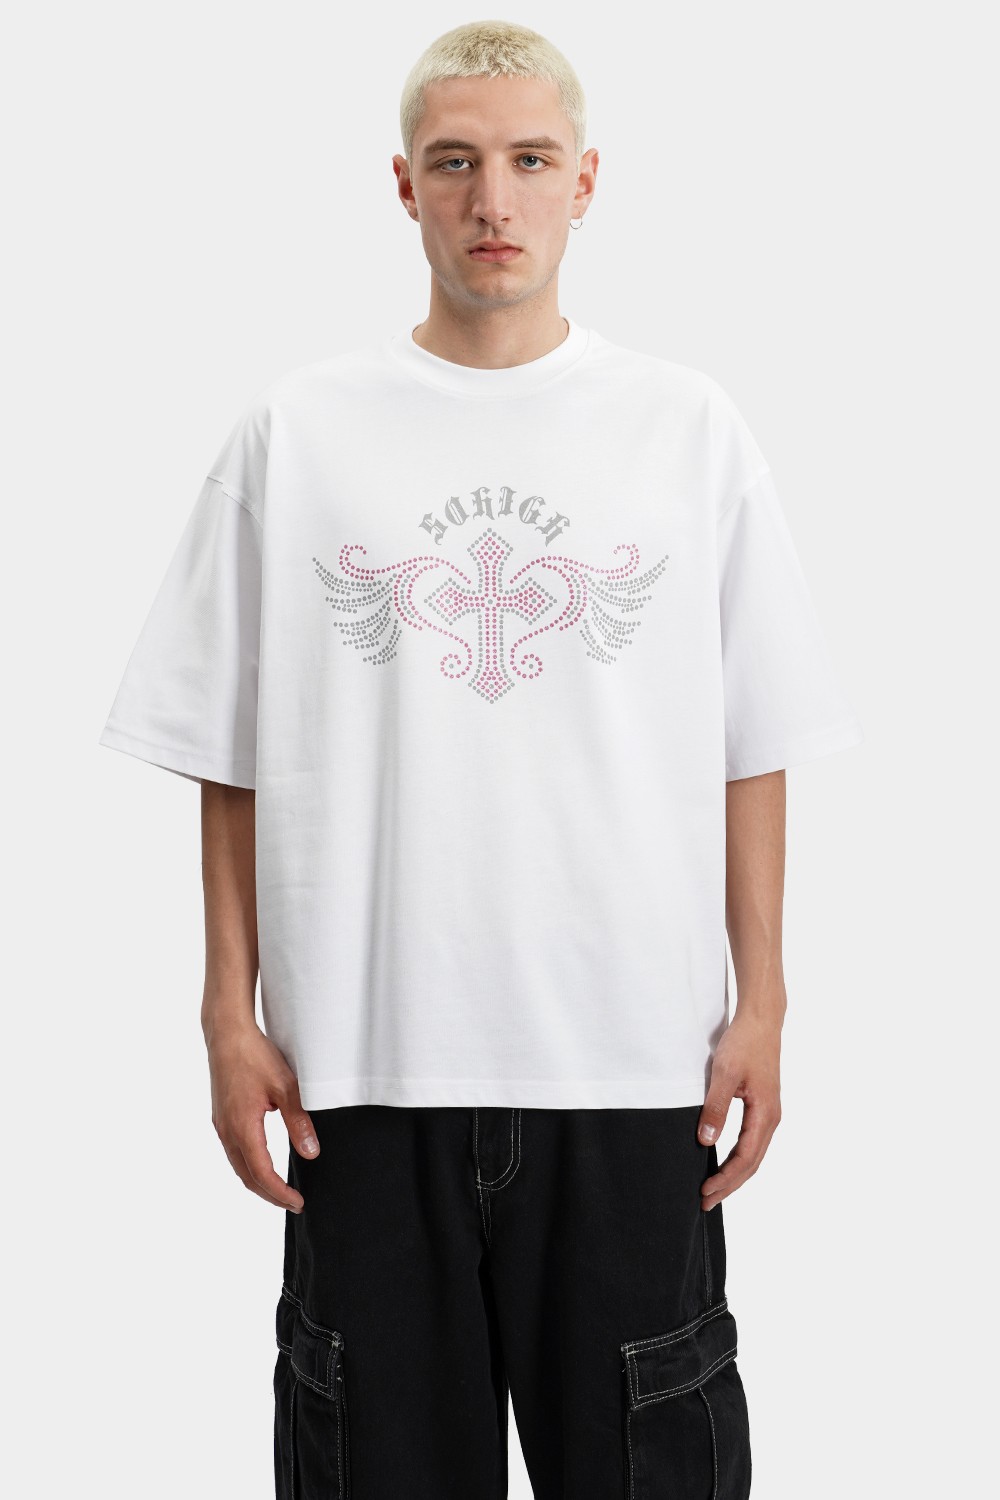 Sohigh Dotted Cross T-Shirt (SHT-4)